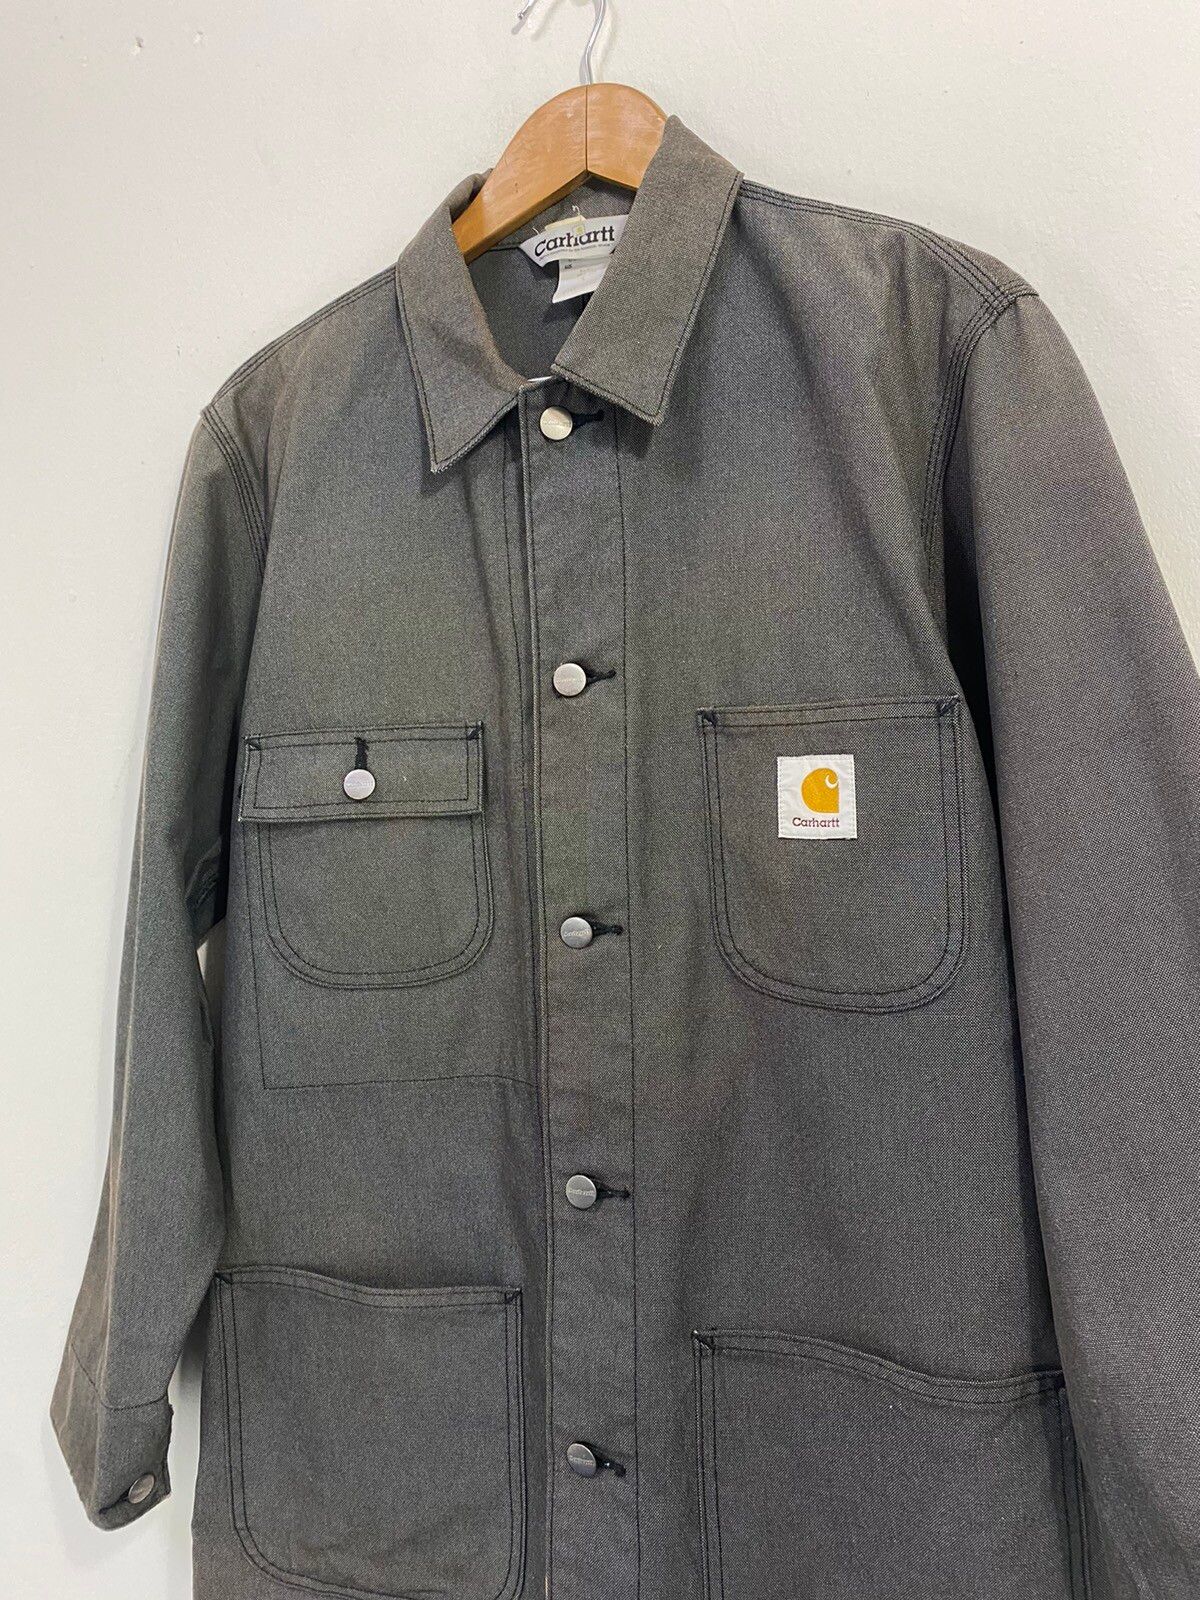 Carhartt Chore Jacket 4 Pocket Design Rare Design - 3